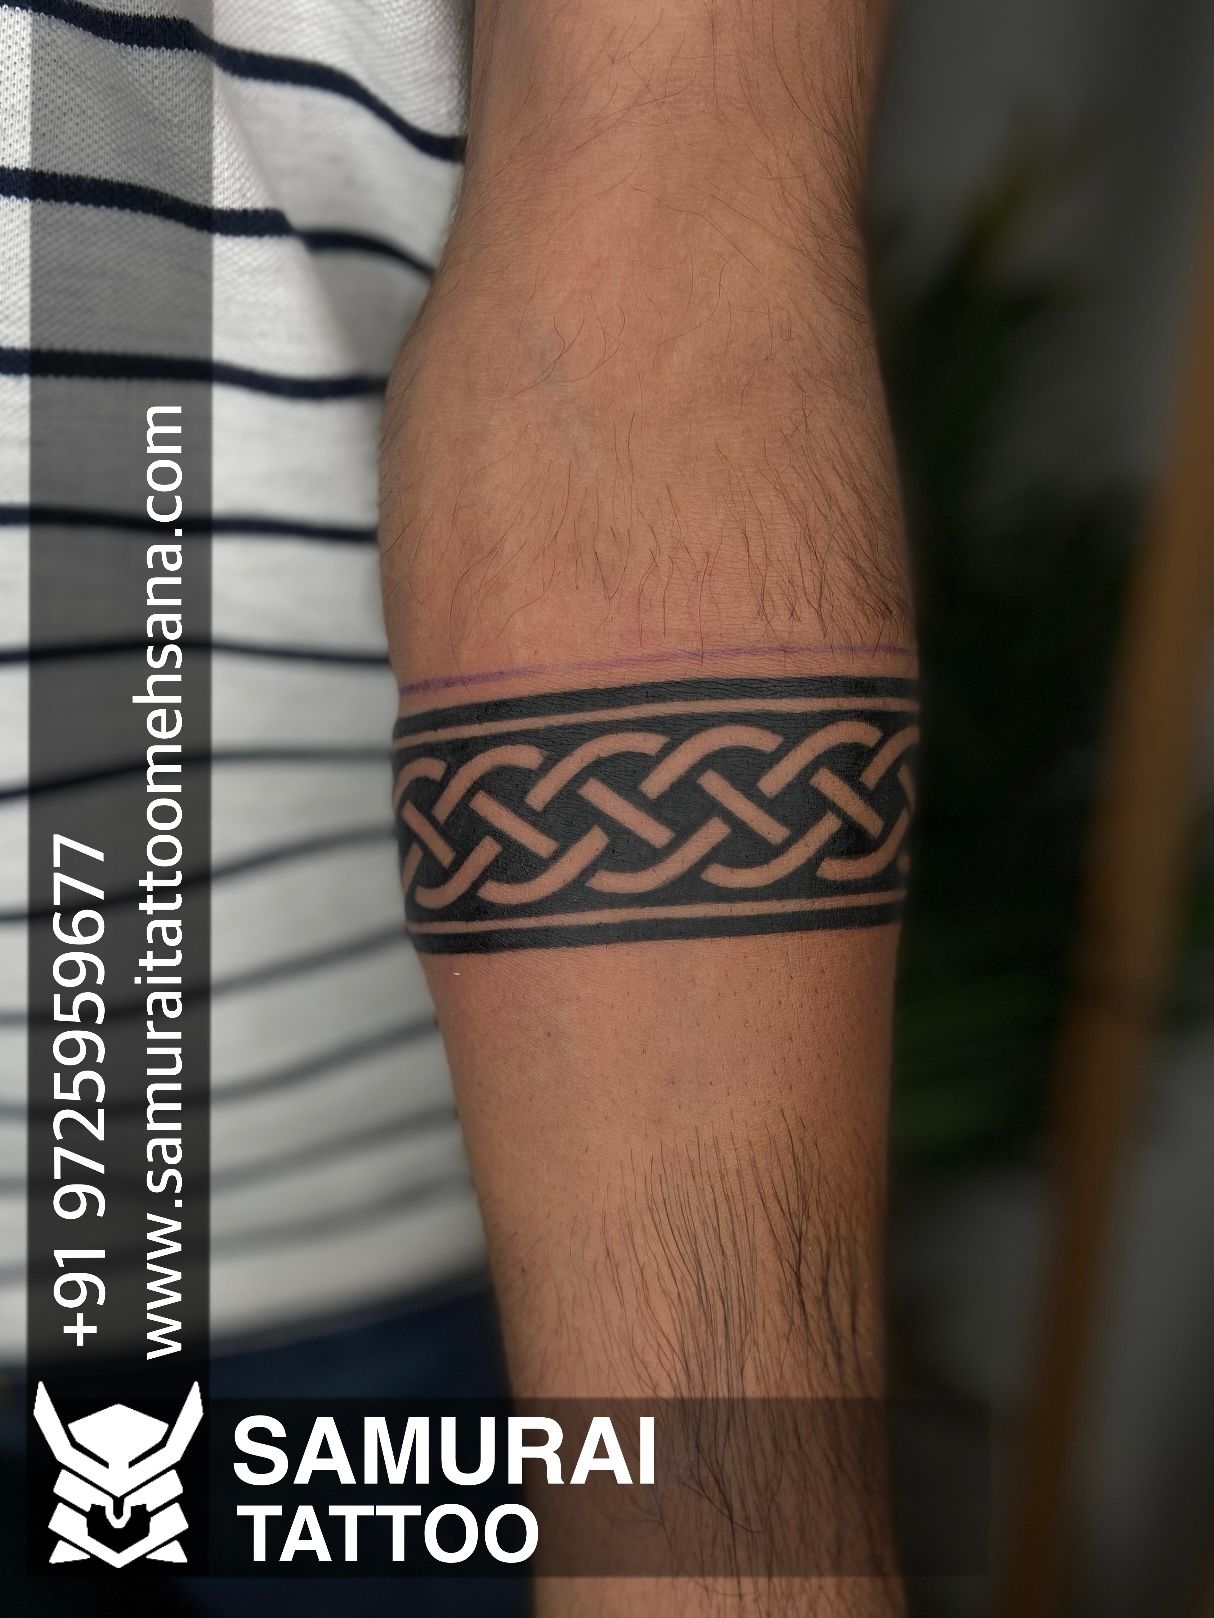 Arm Band Tattoo by artwaysachinktattoos on DeviantArt